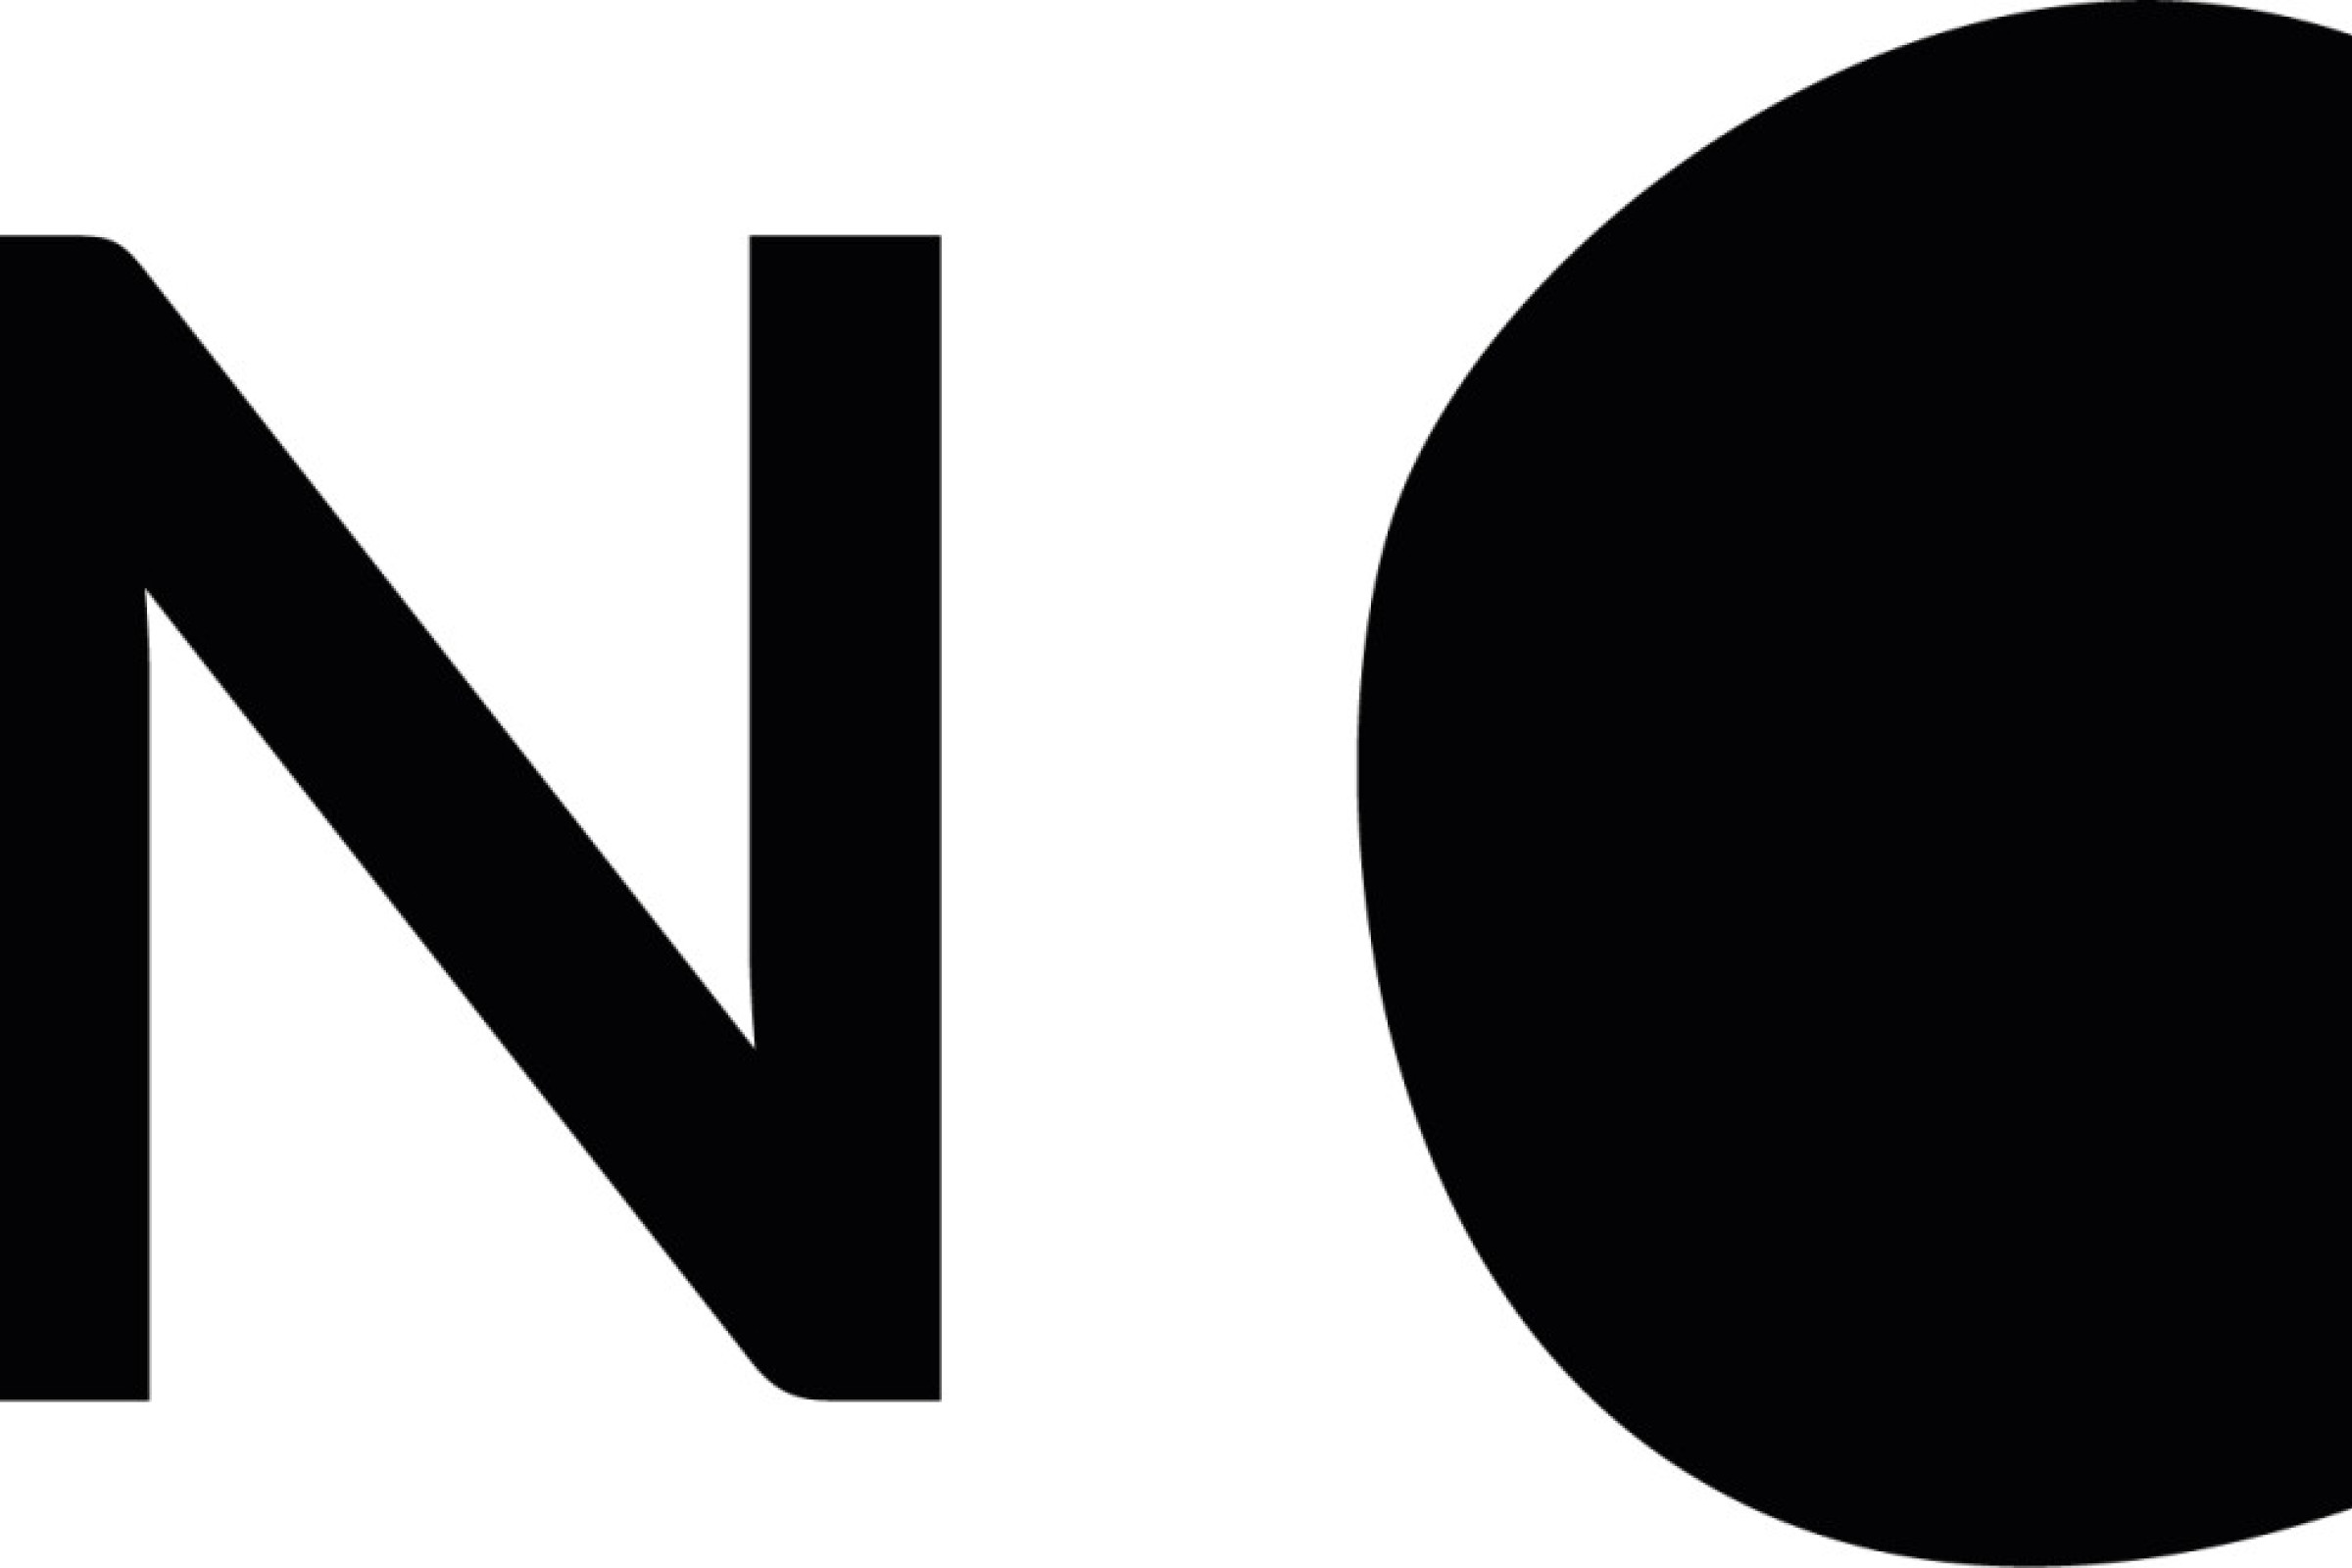 nn07 logo